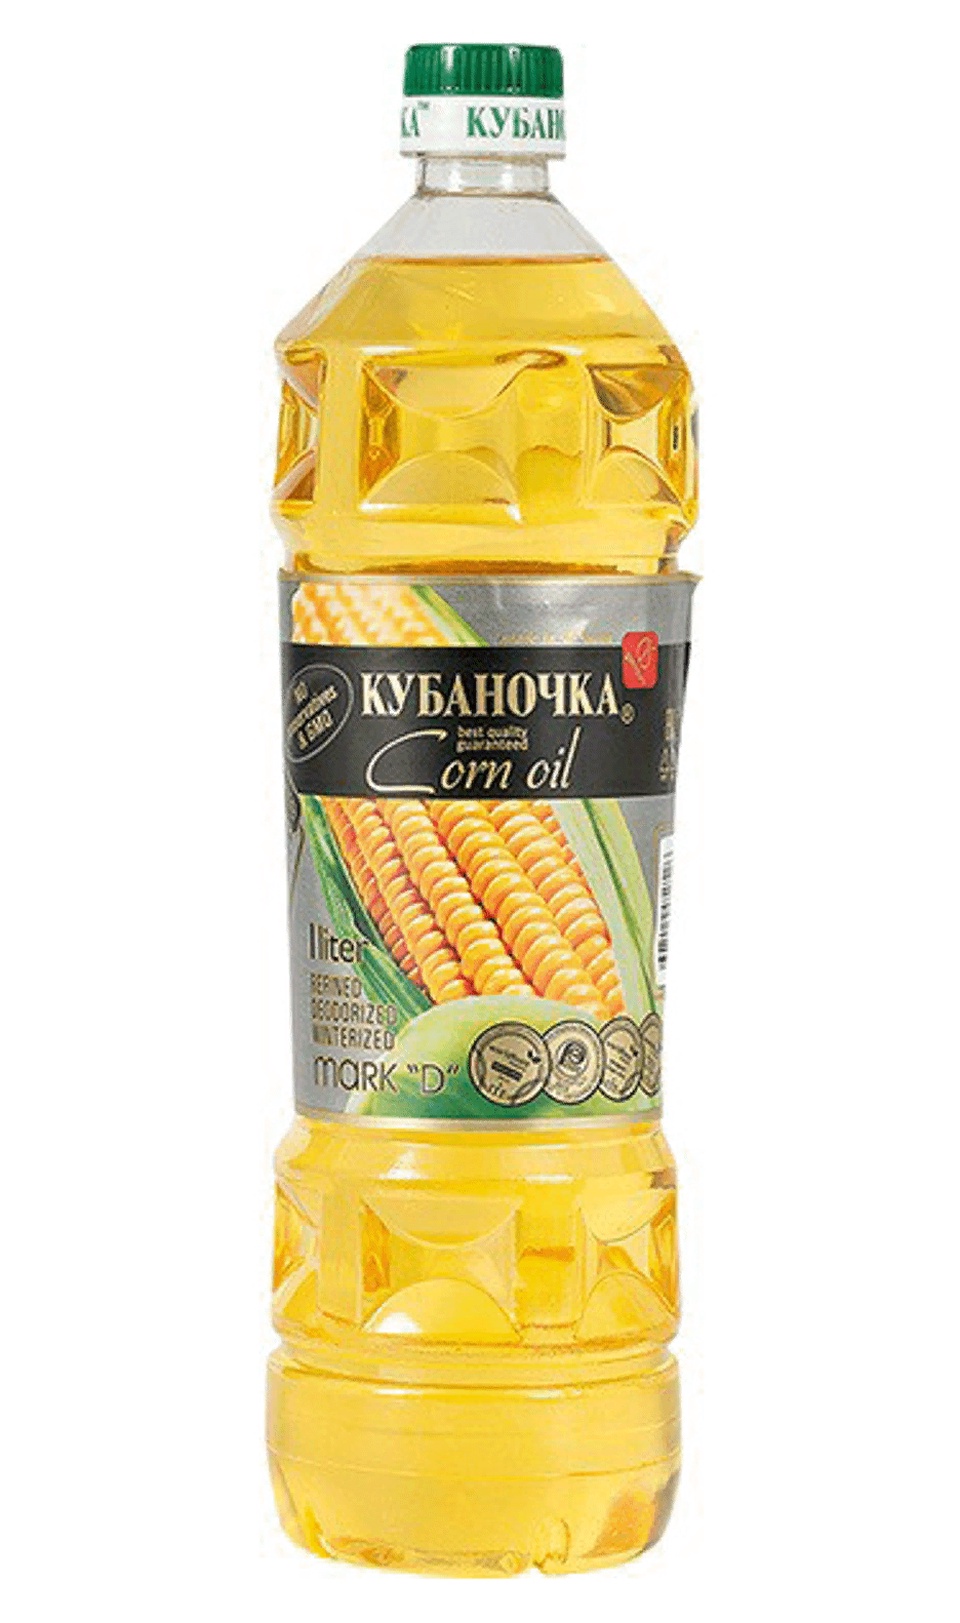 Кубаночка 1л кукурузное масло рафин/дезод - 198 ₽, заказать онлайн.